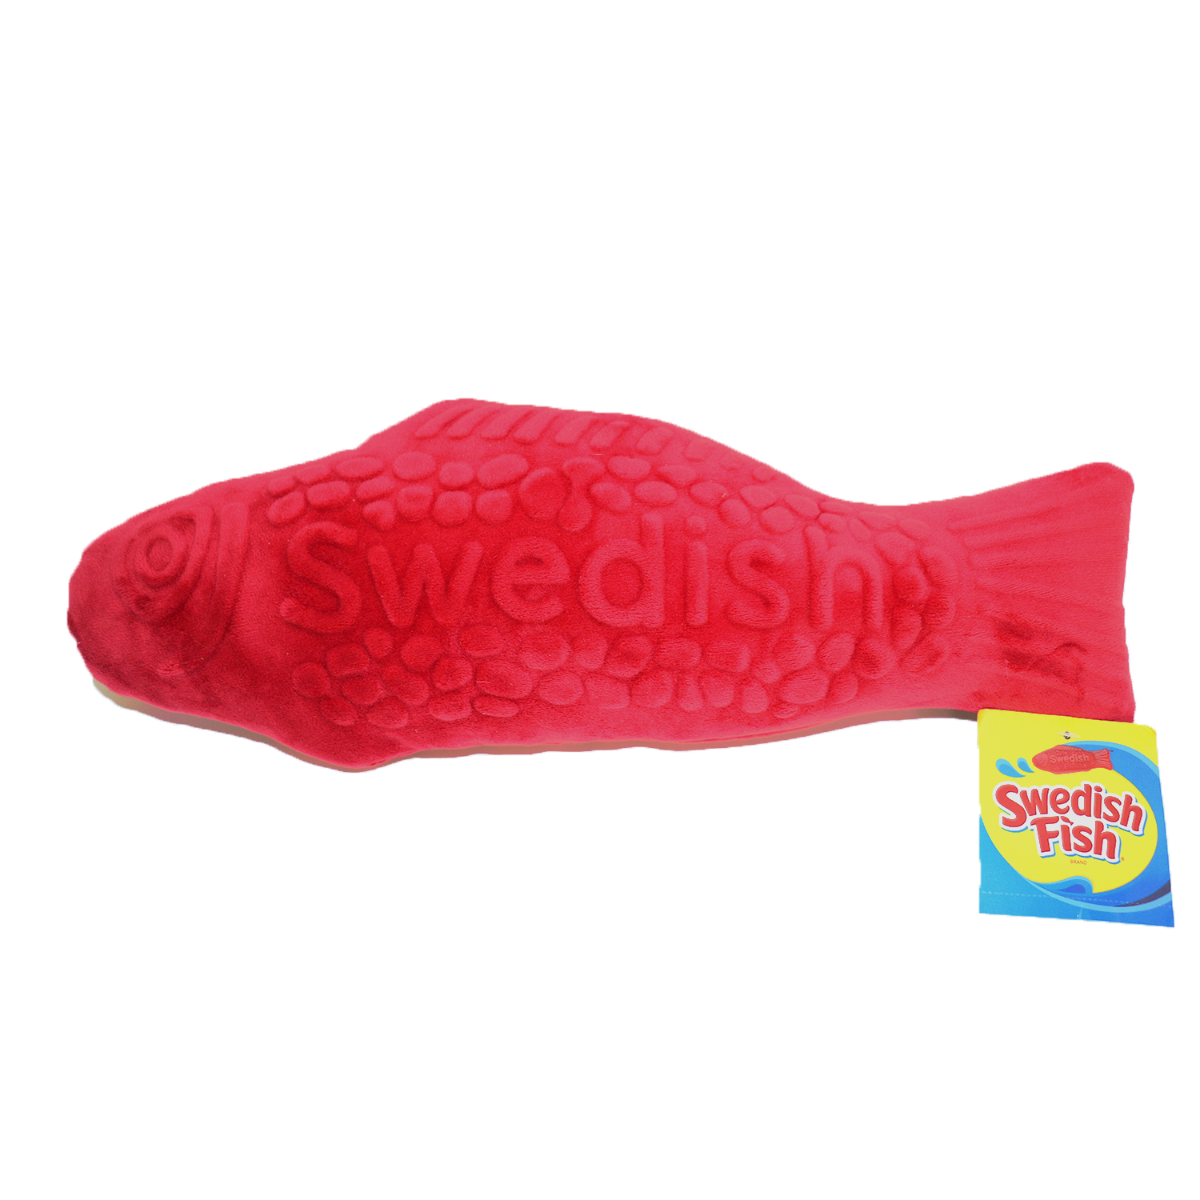 IT'SUGAR, Swedish Fish Embossed Plush Pillow